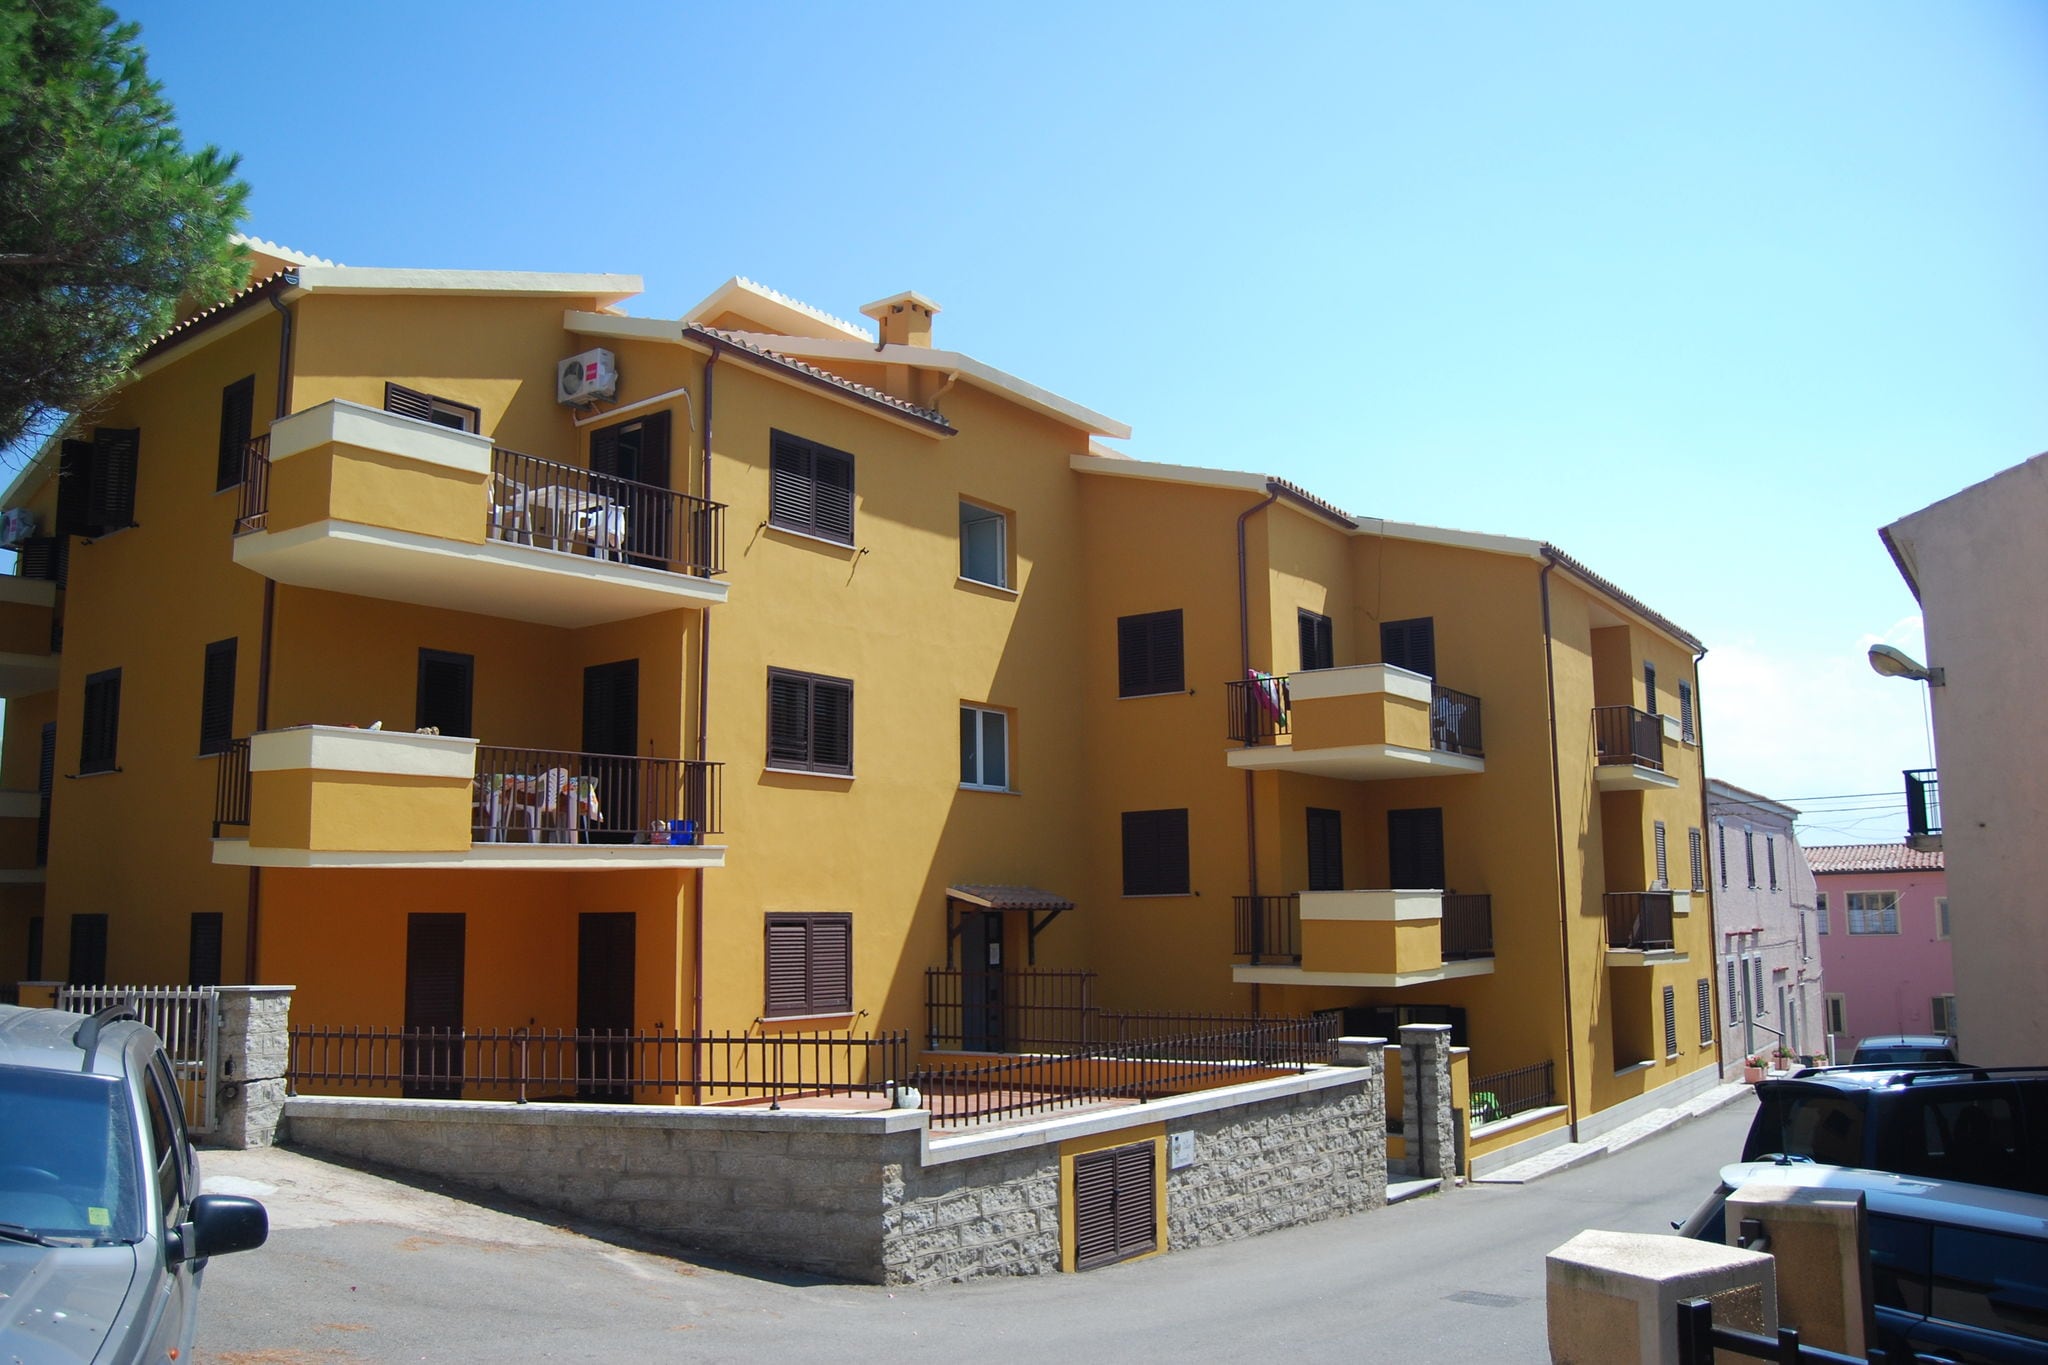 Wohnung in Residenz in Santa Teresa Gallura, 500 m vom Meer, 